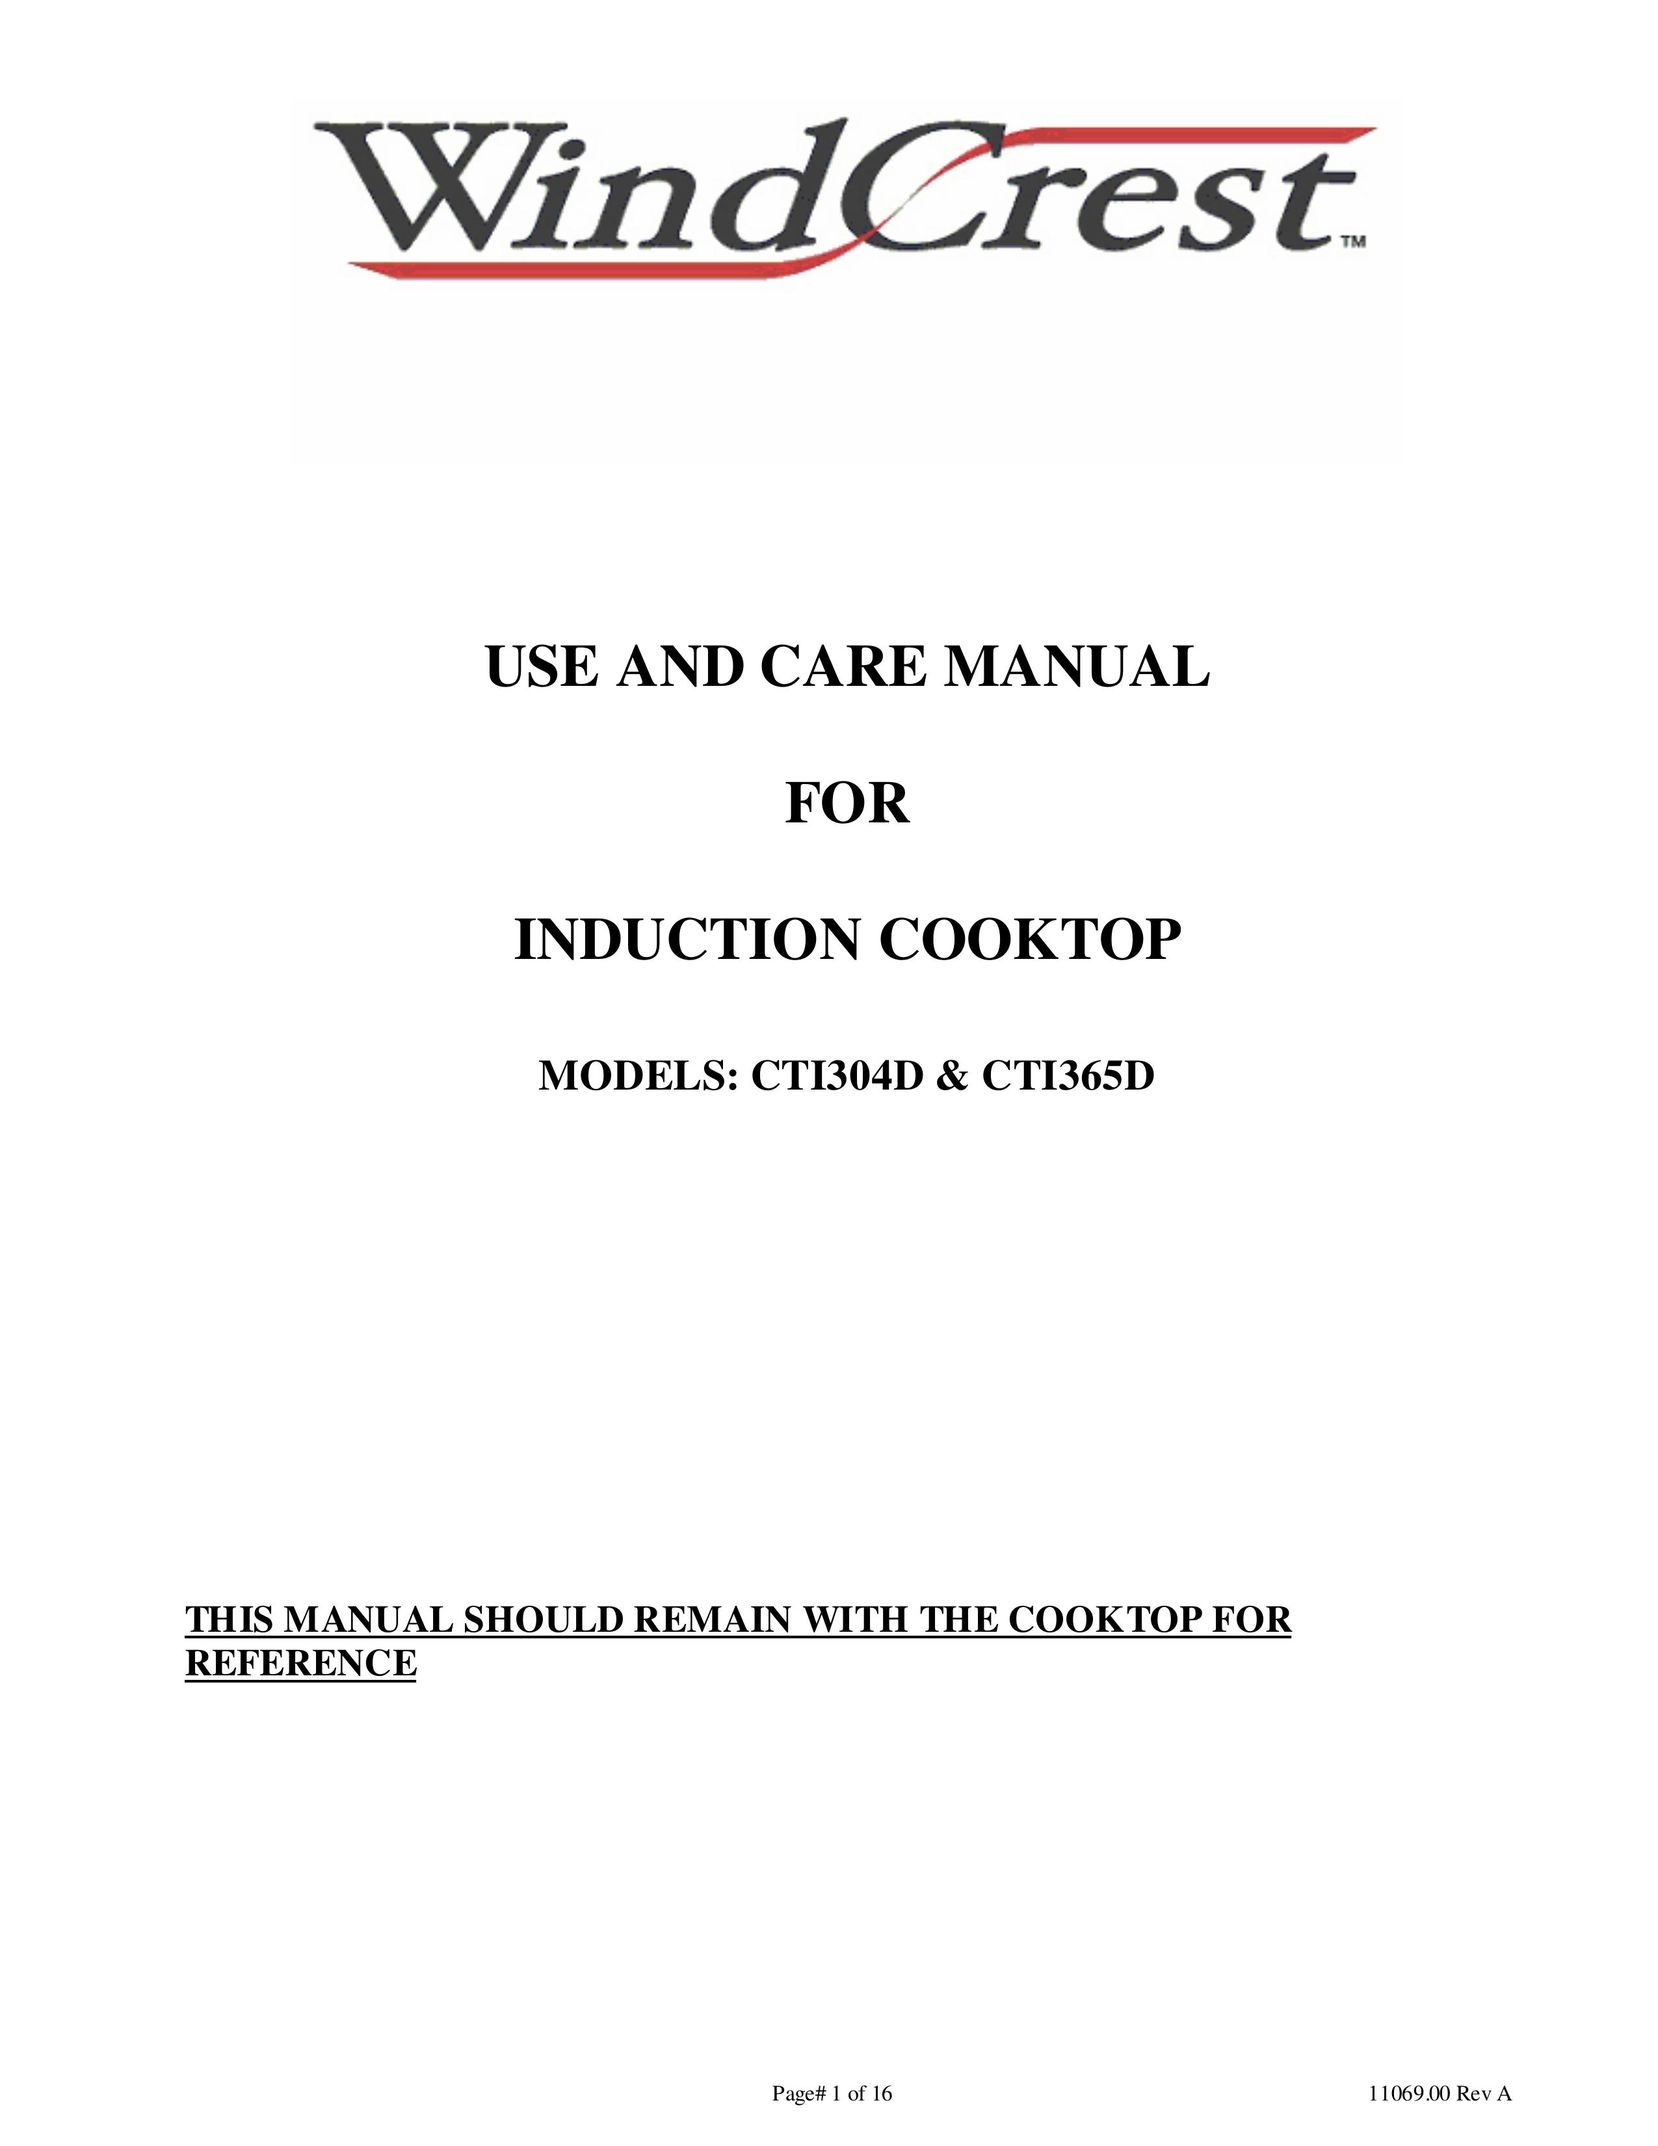 Wind Crest CTI304D Cooktop User Manual